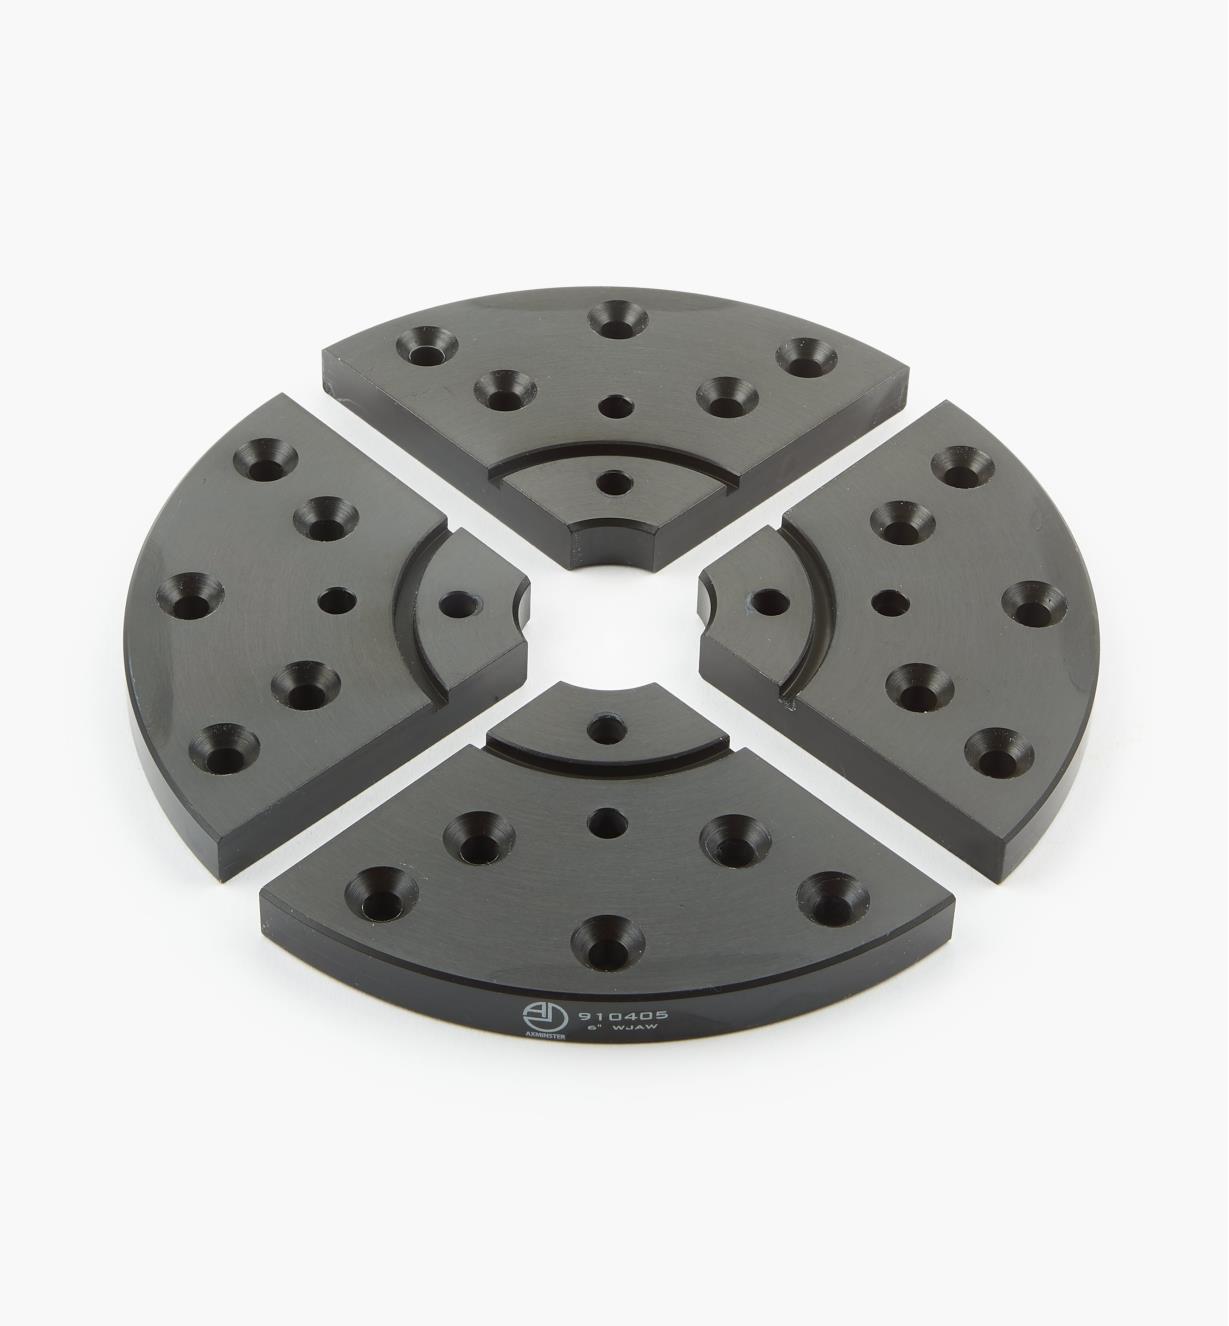 58B4085 - Axminster 150mm (5 7/8") Jaw Plates